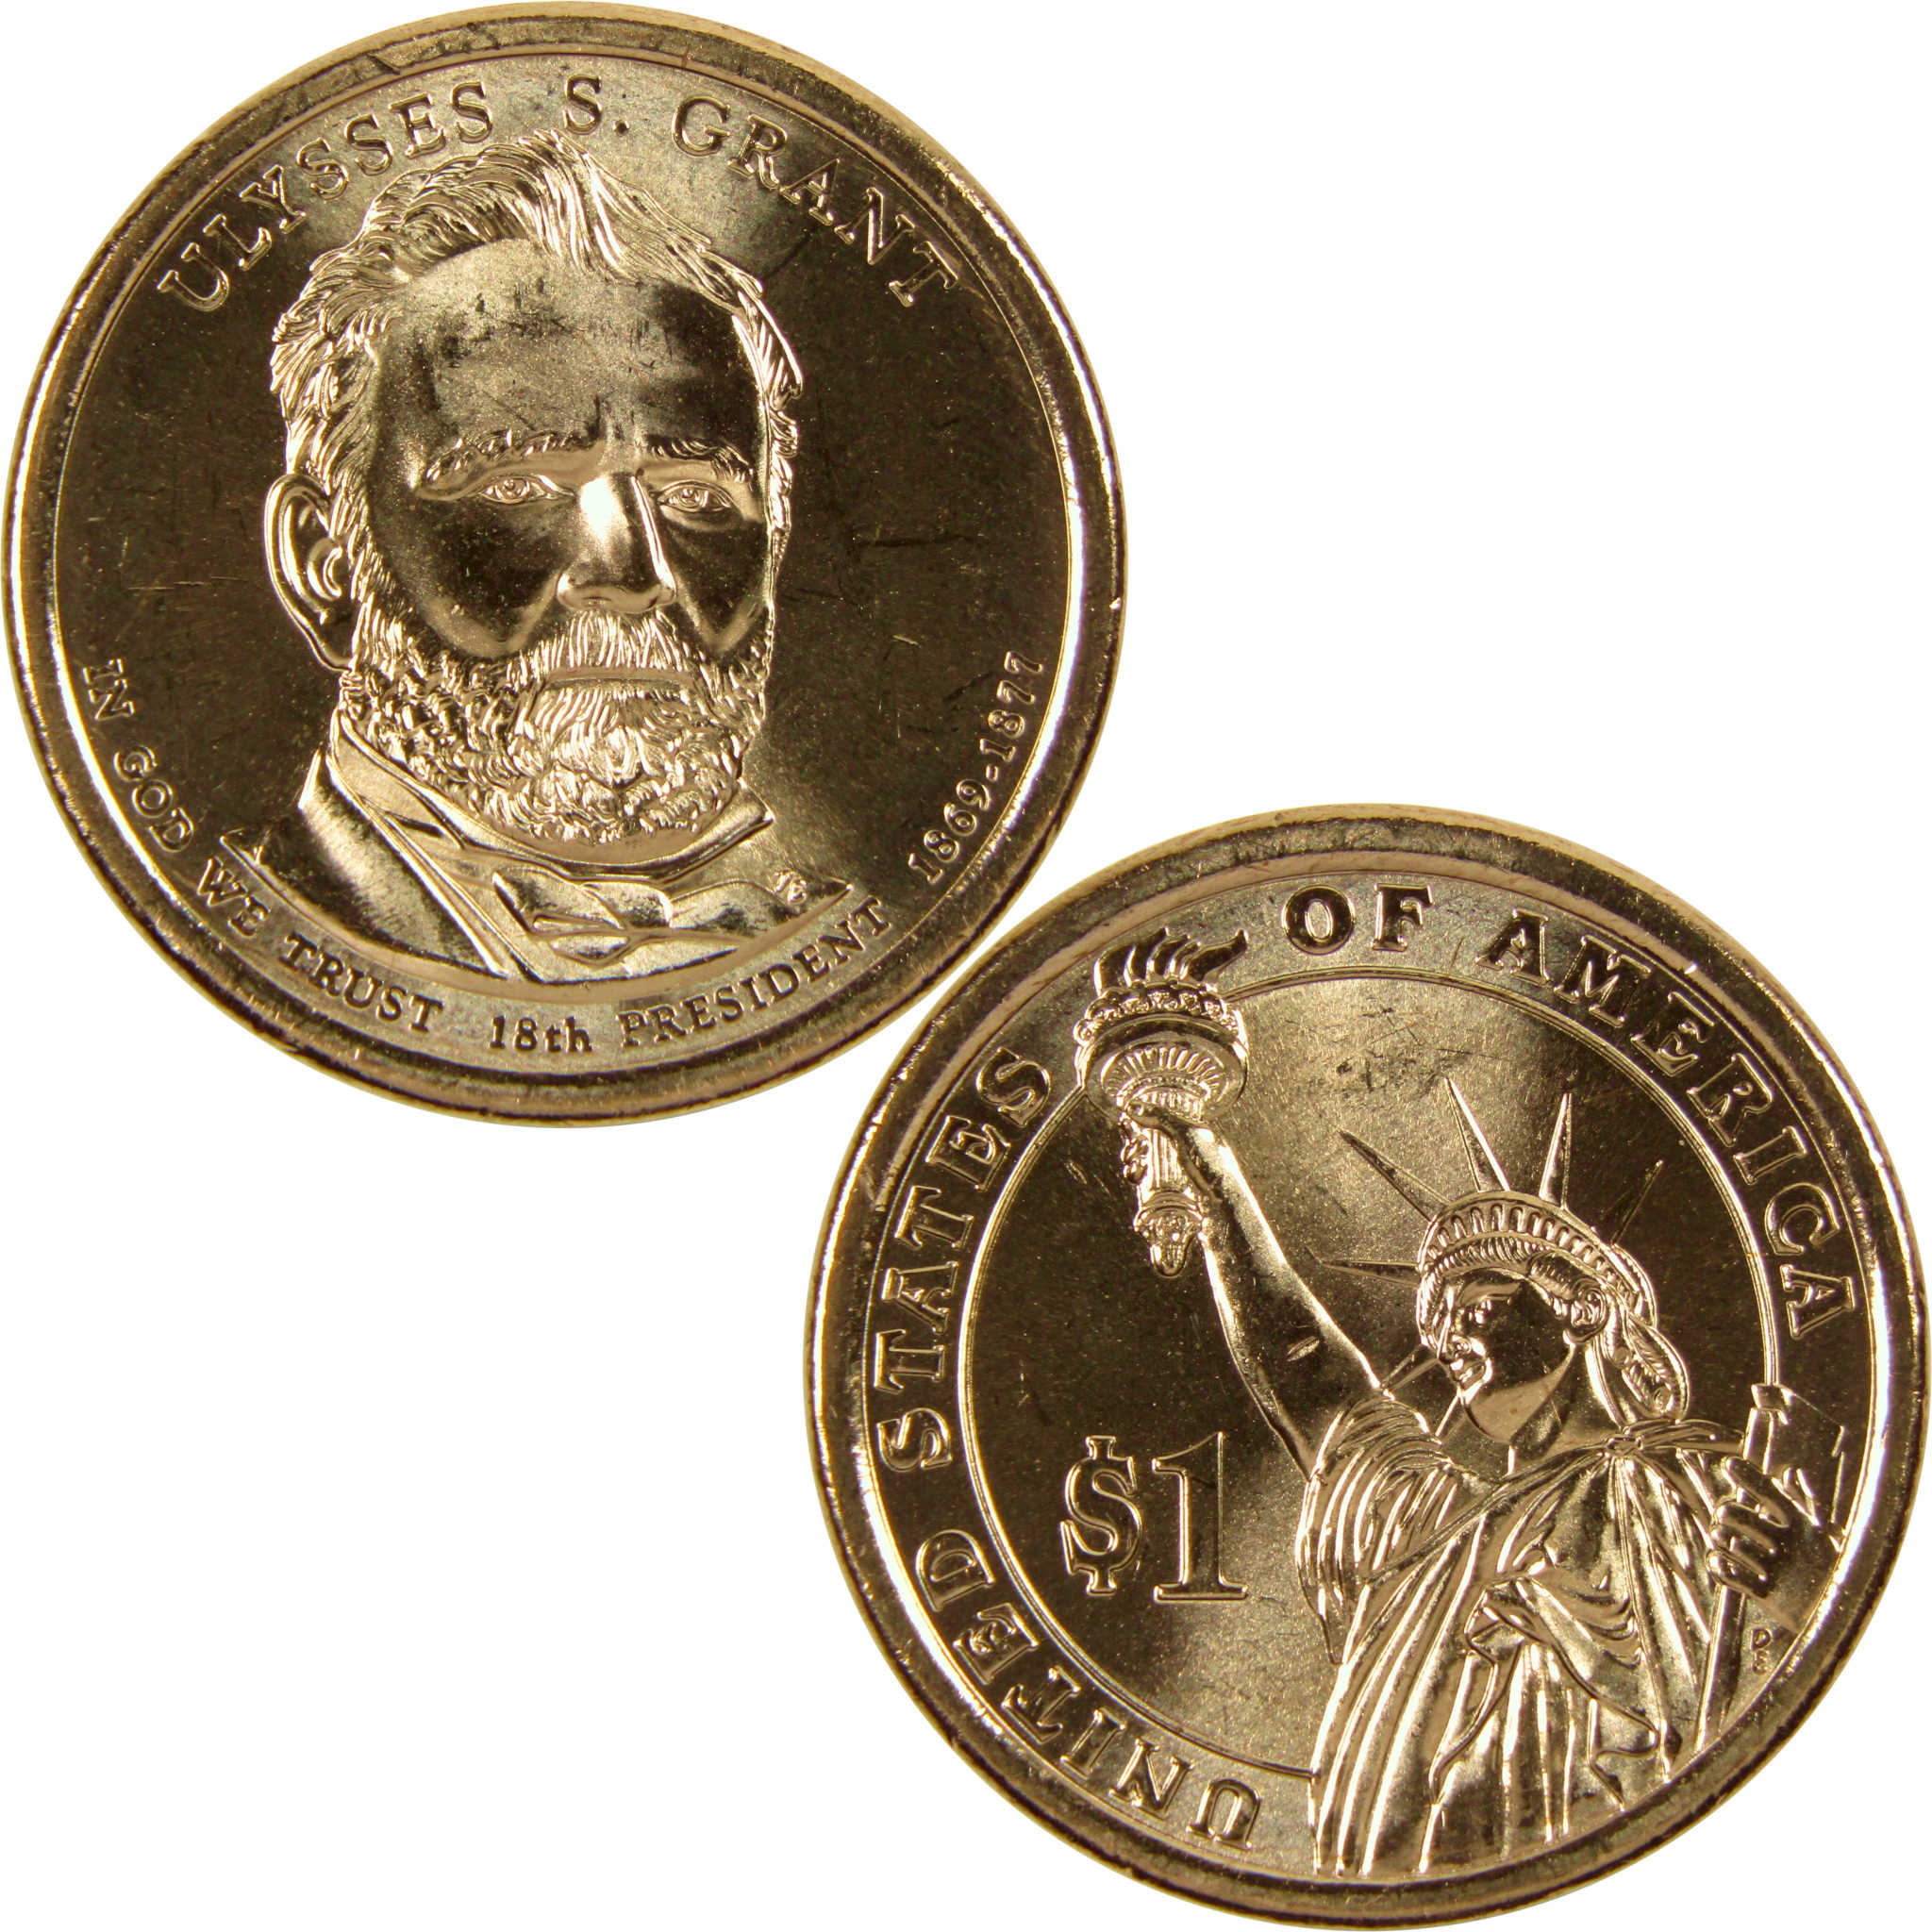 2011 D Ulysses S Grant Presidential Dollar BU Uncirculated $1 Coin